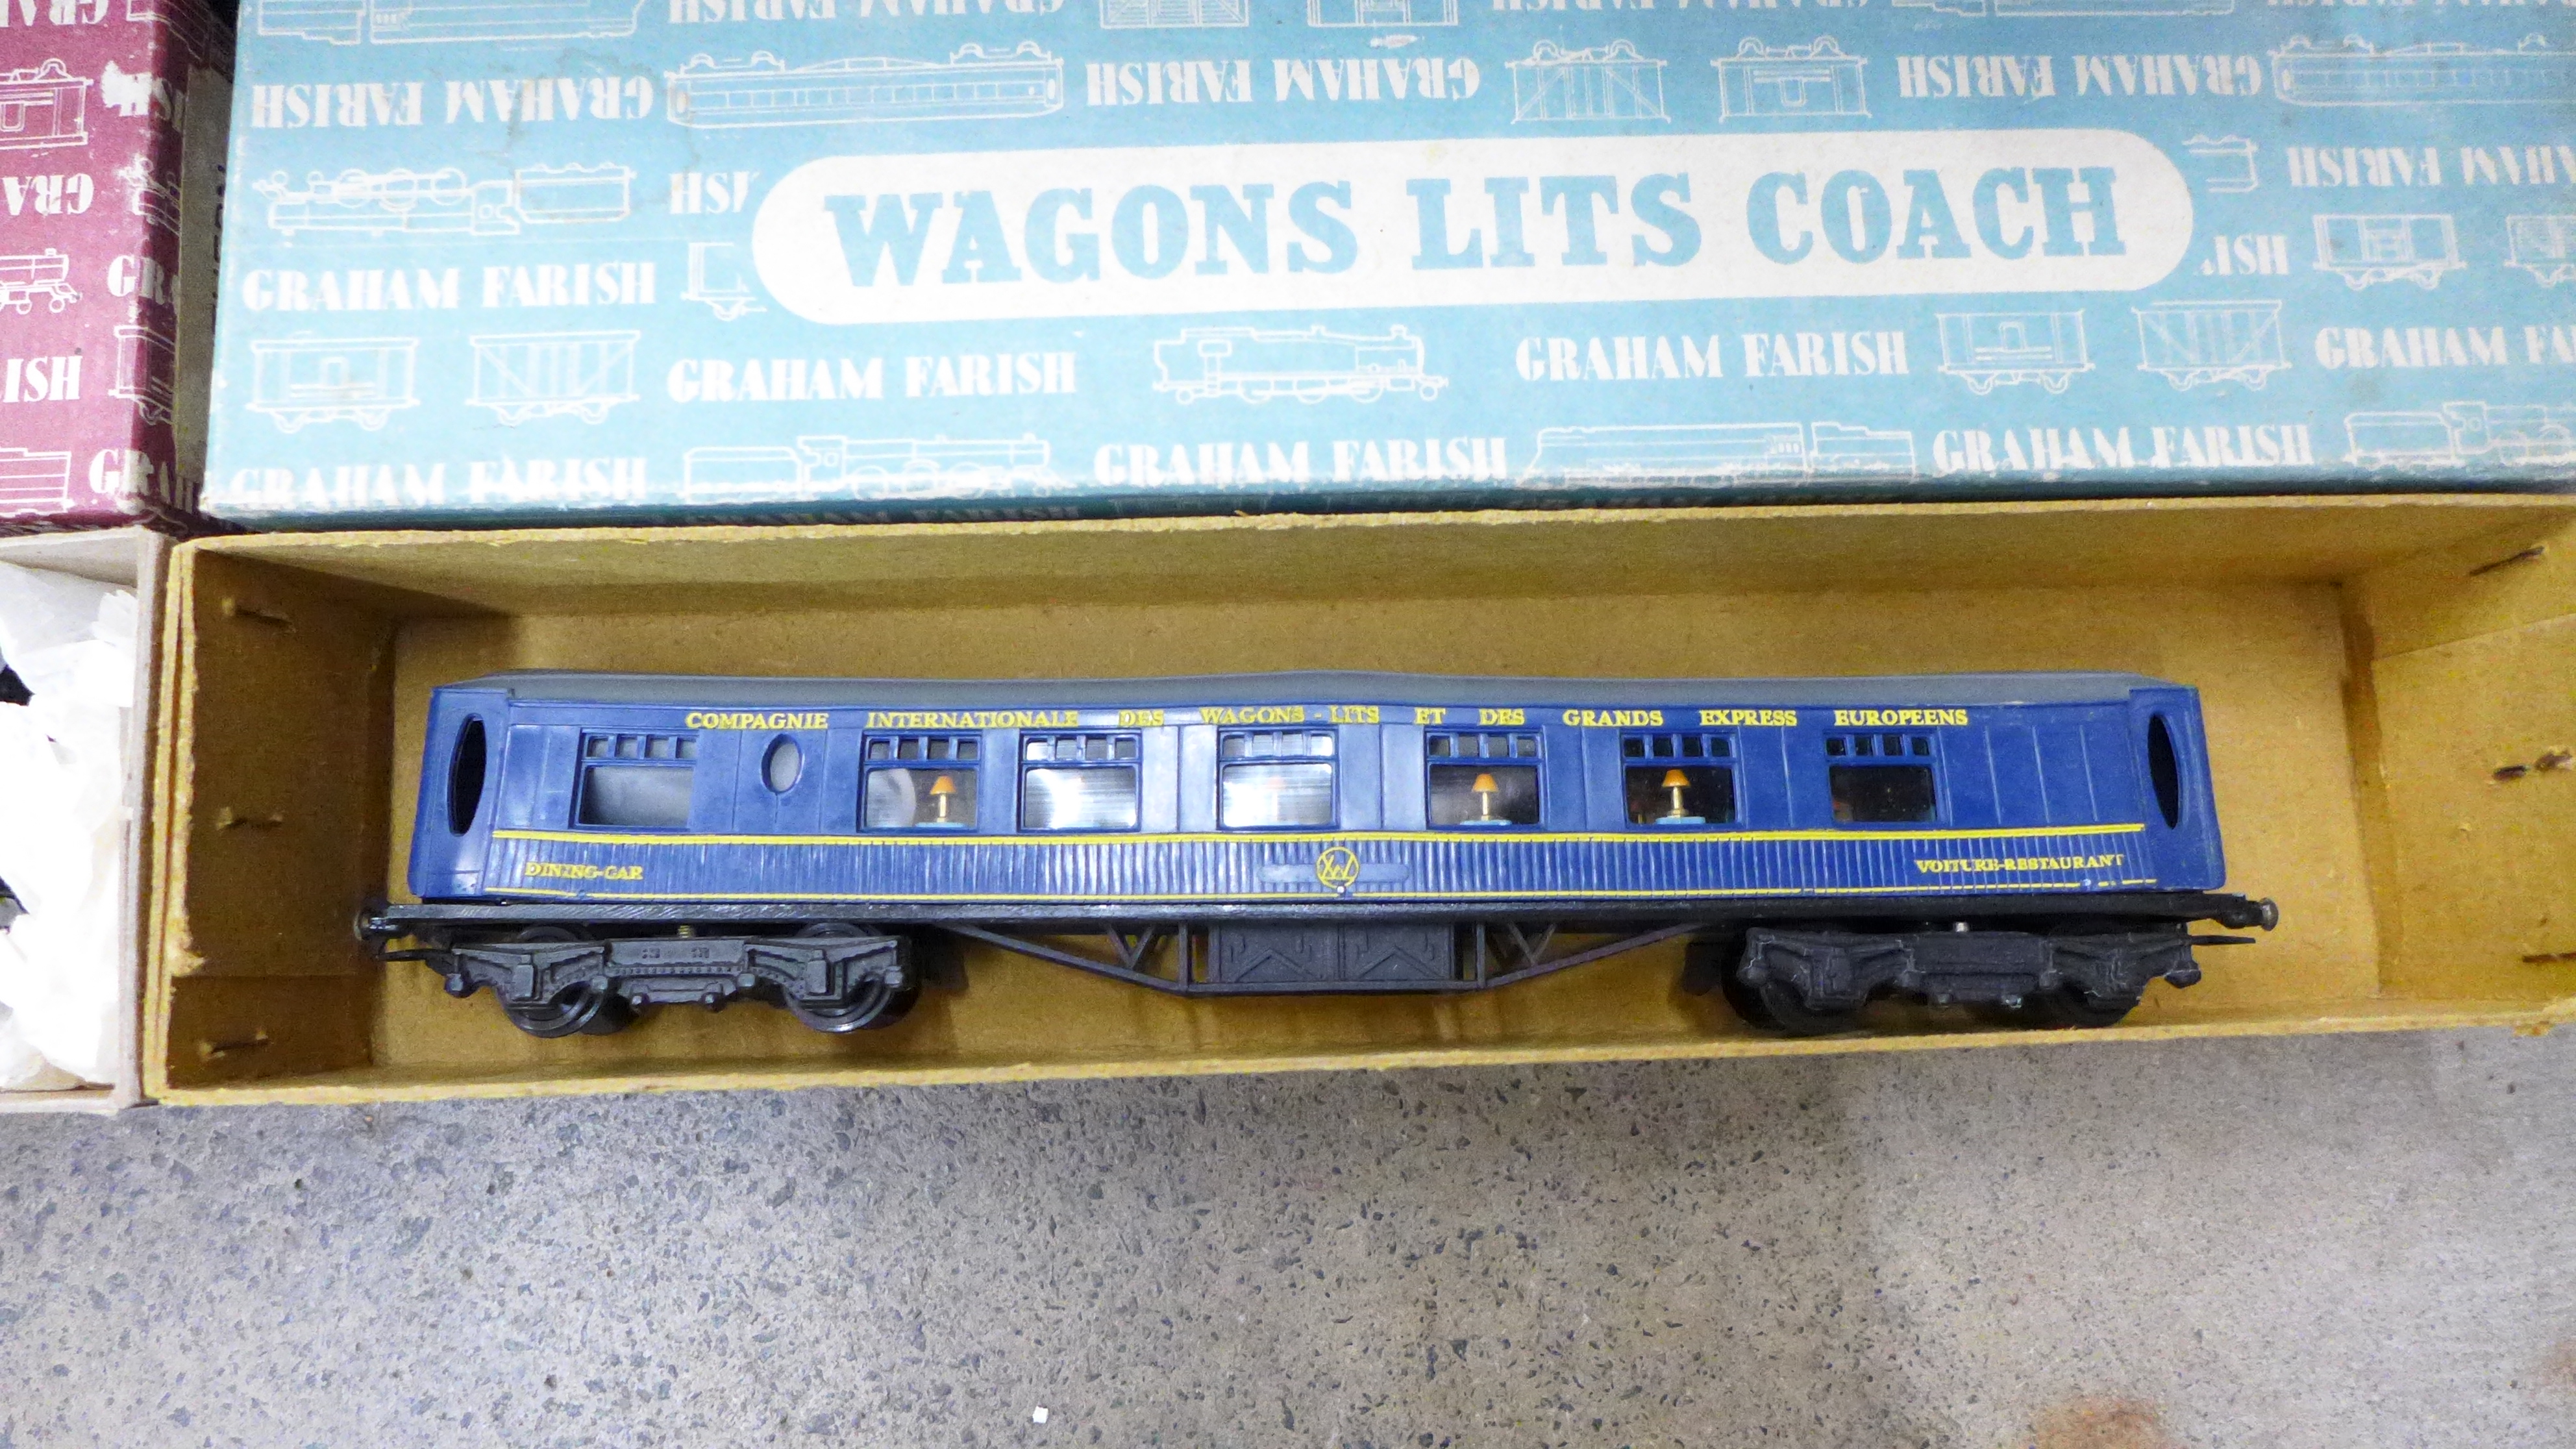 Graham Farish model rail, including Suburban Coach x2, Wagon Lits Coach, control unit - Image 2 of 4